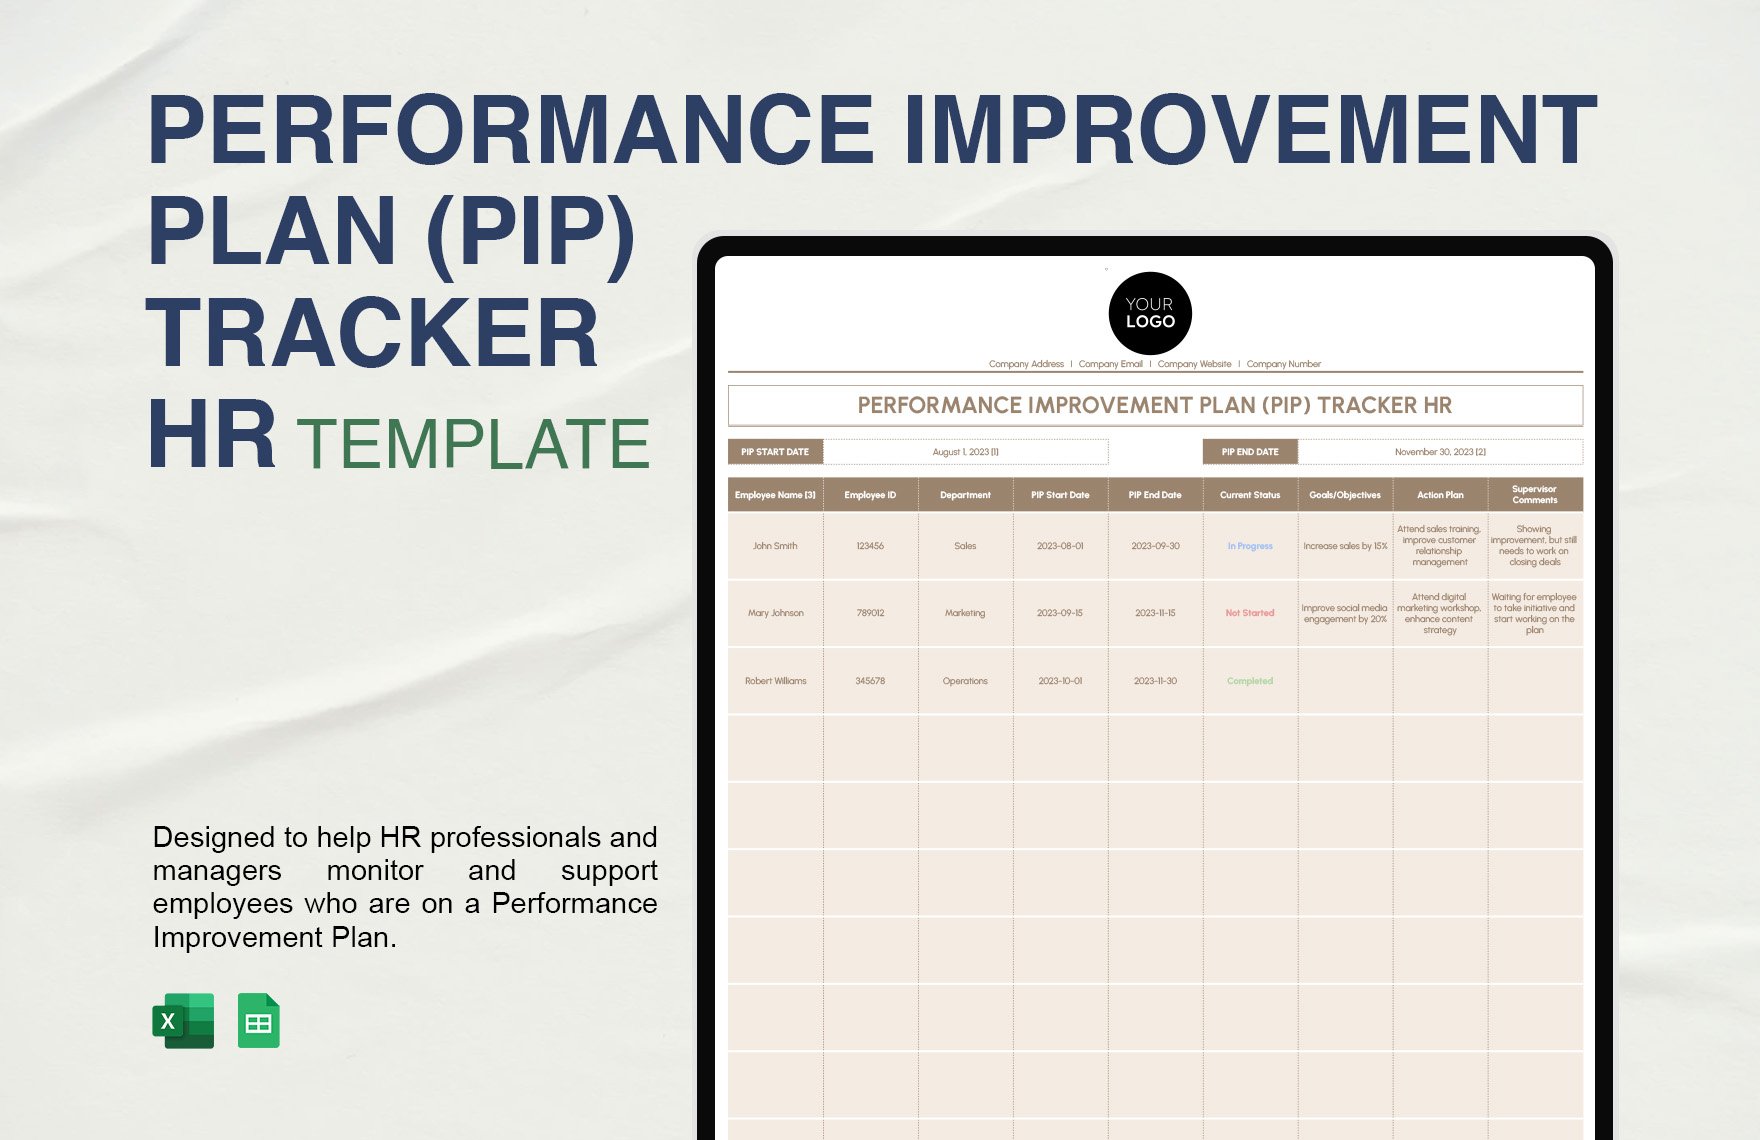 Performance Improvement Plan (PIP) Tracker HR Template